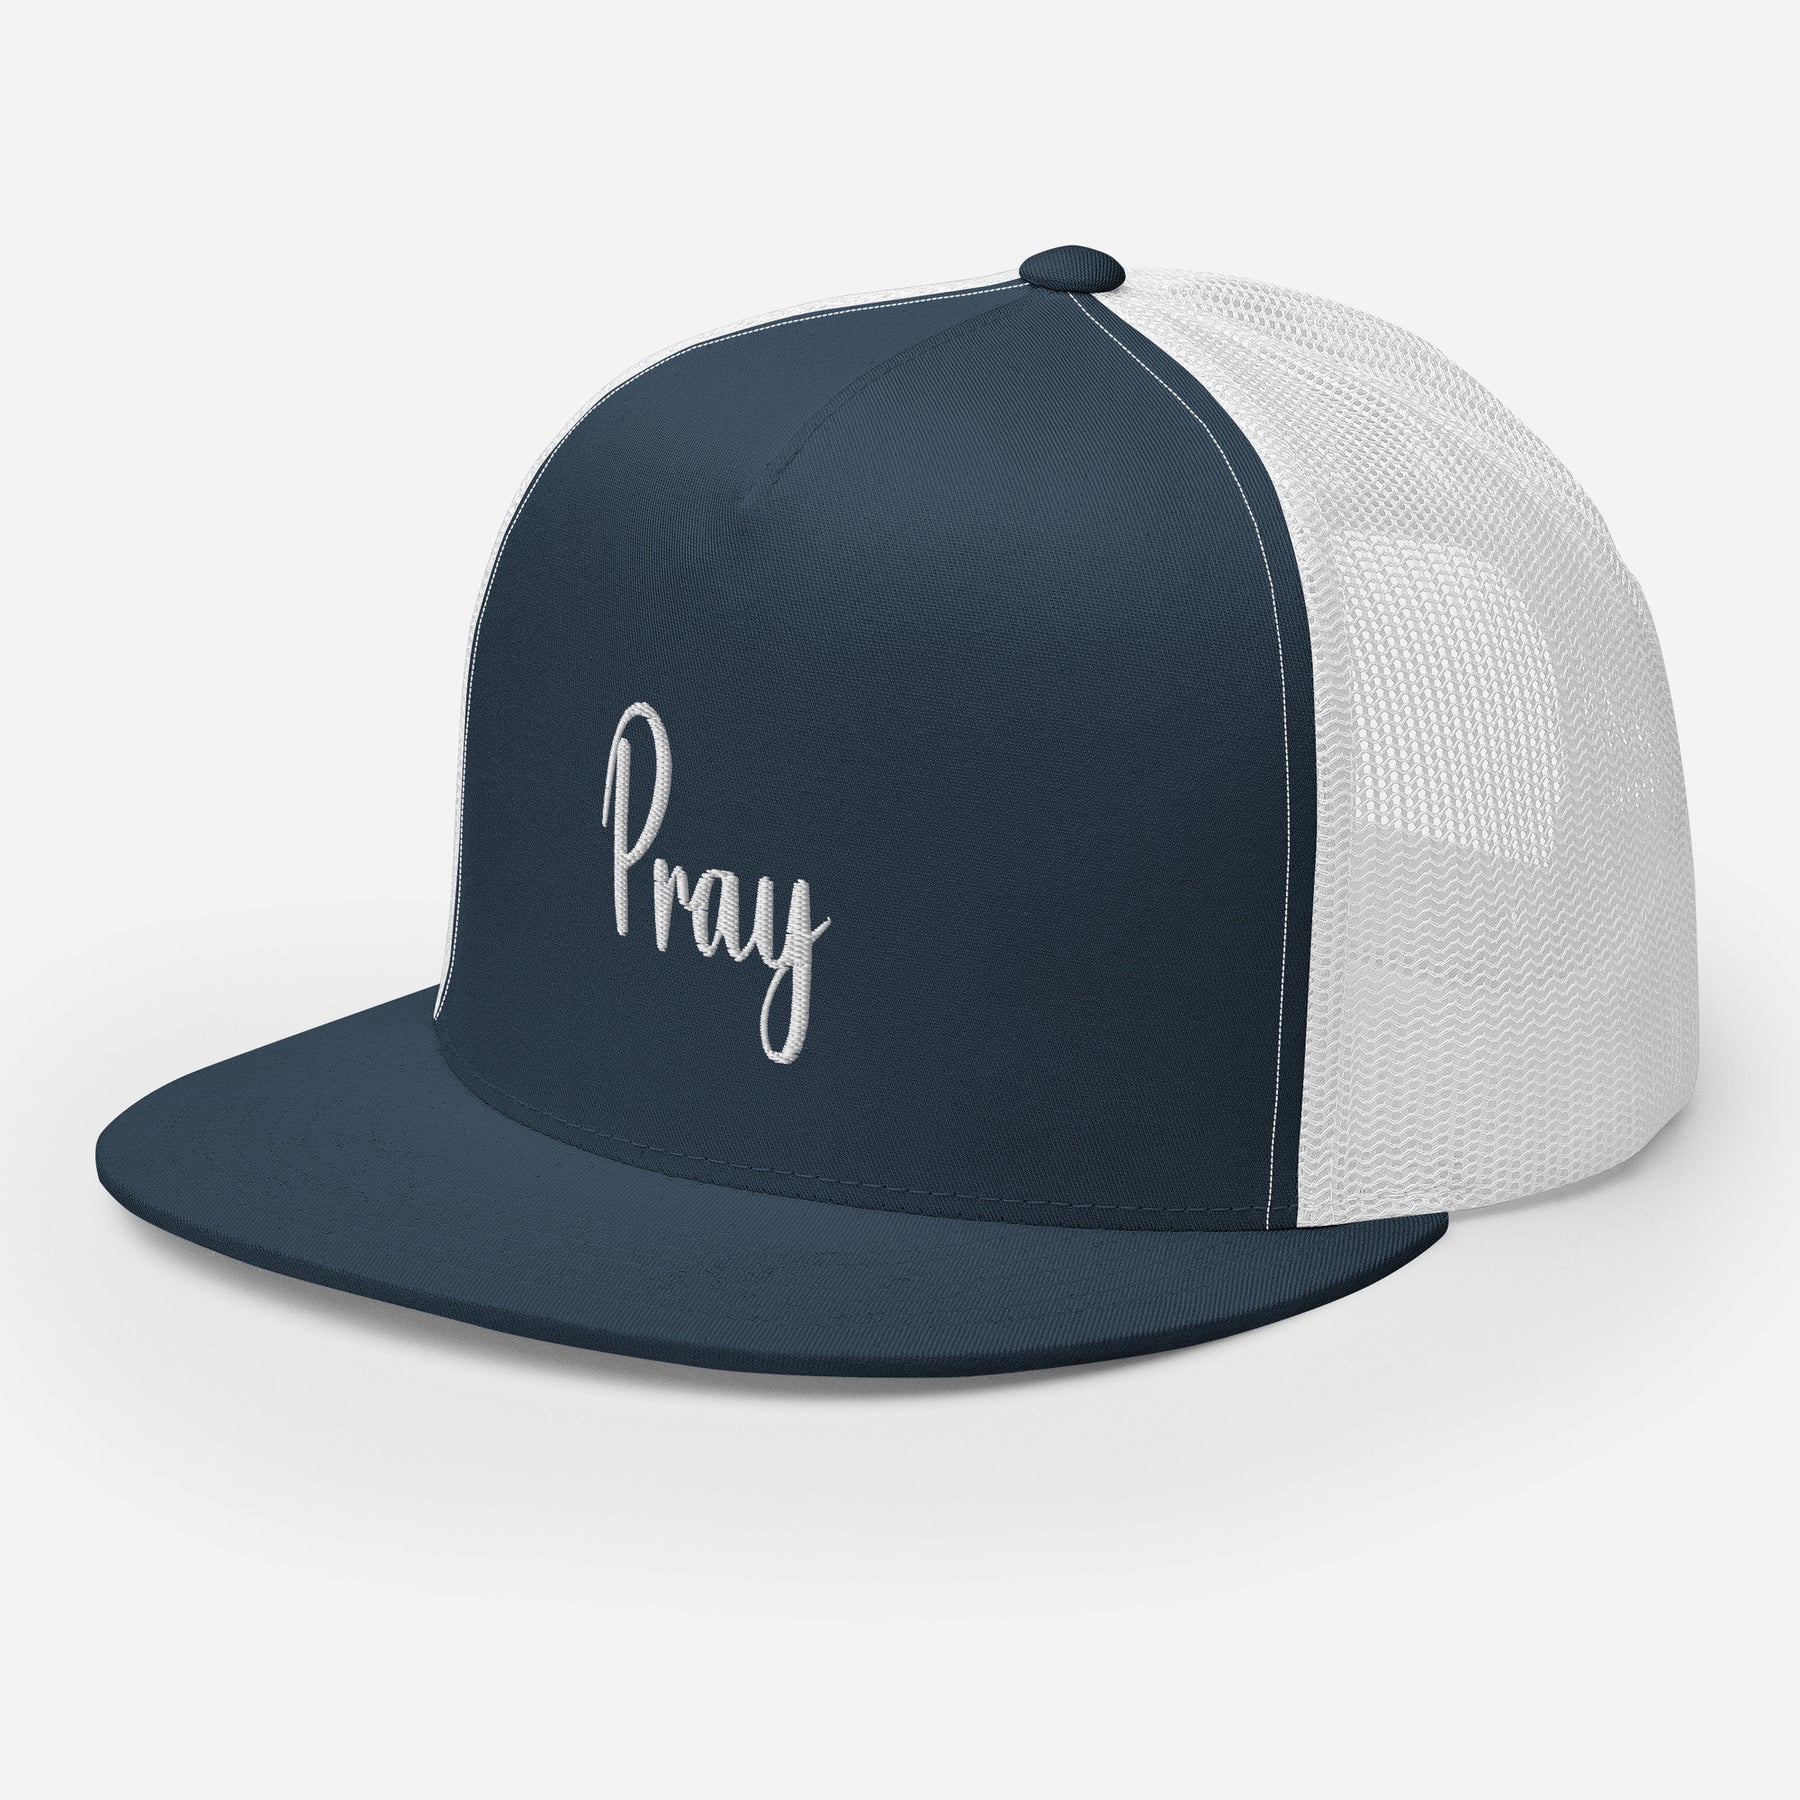 Pray- mesh trucker hat